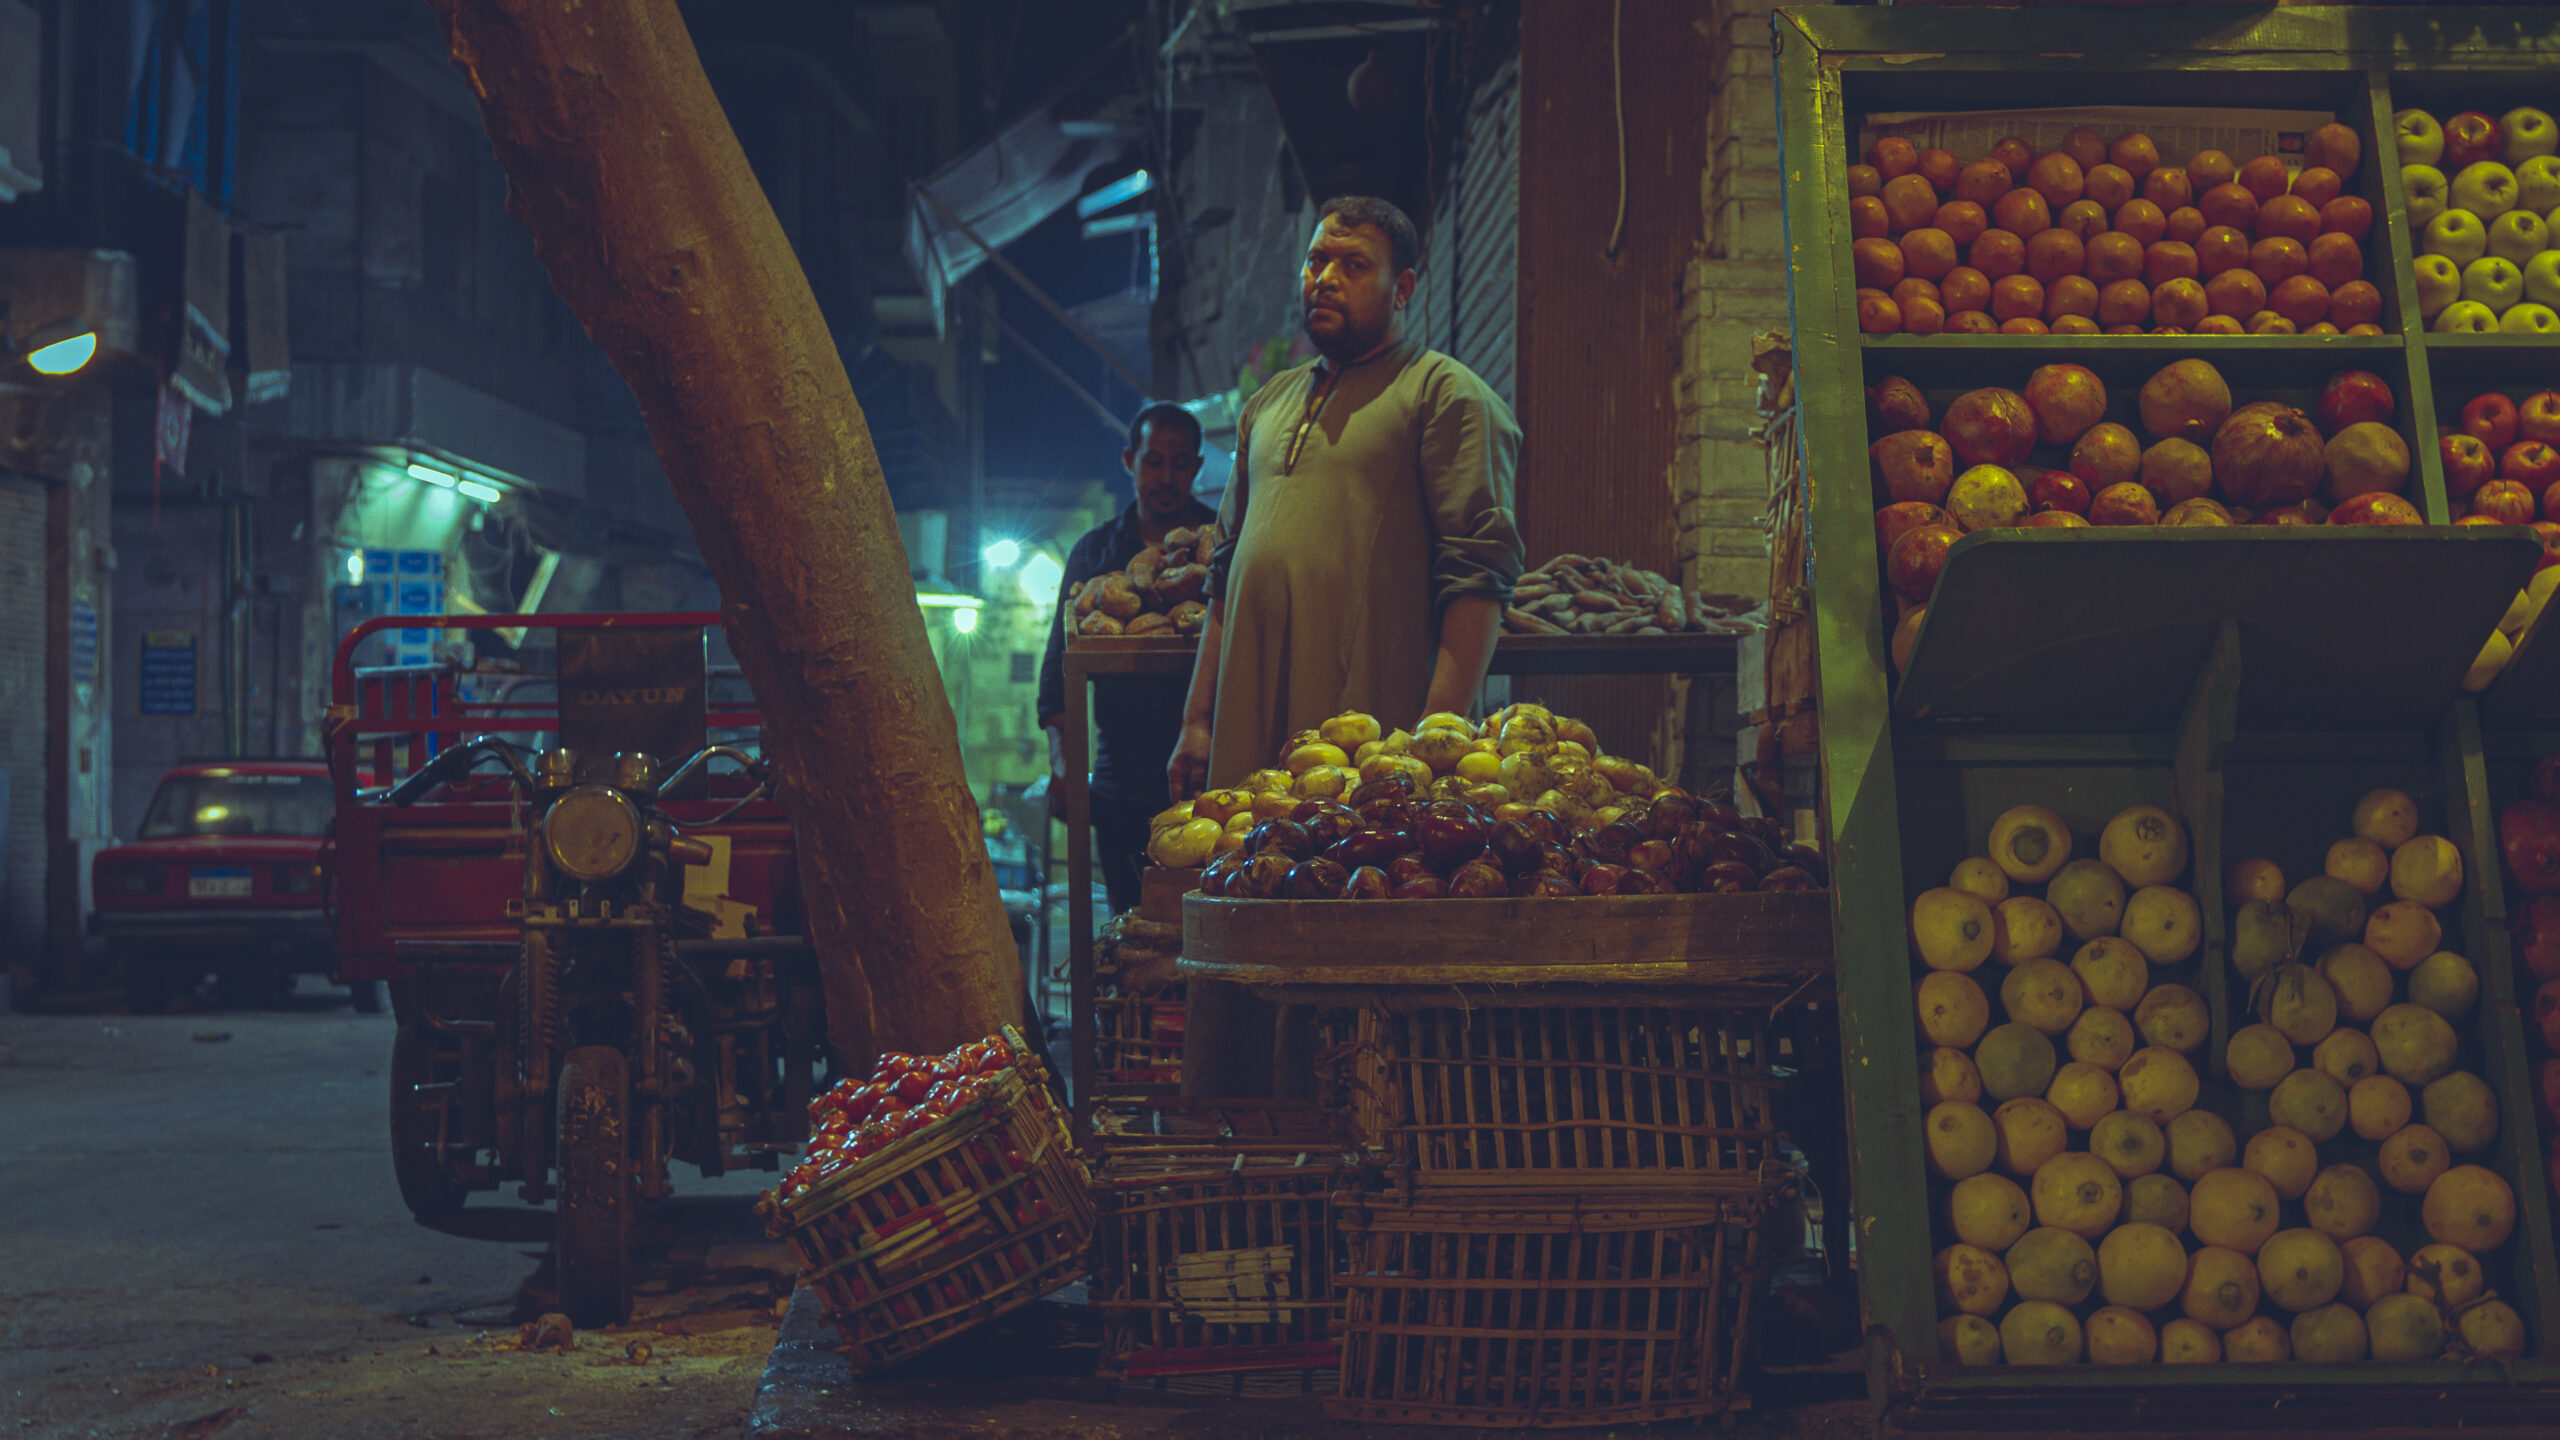 Mercader de El Cairo - ©Rafael Aldebaran Sanz | SieteFotógrafos